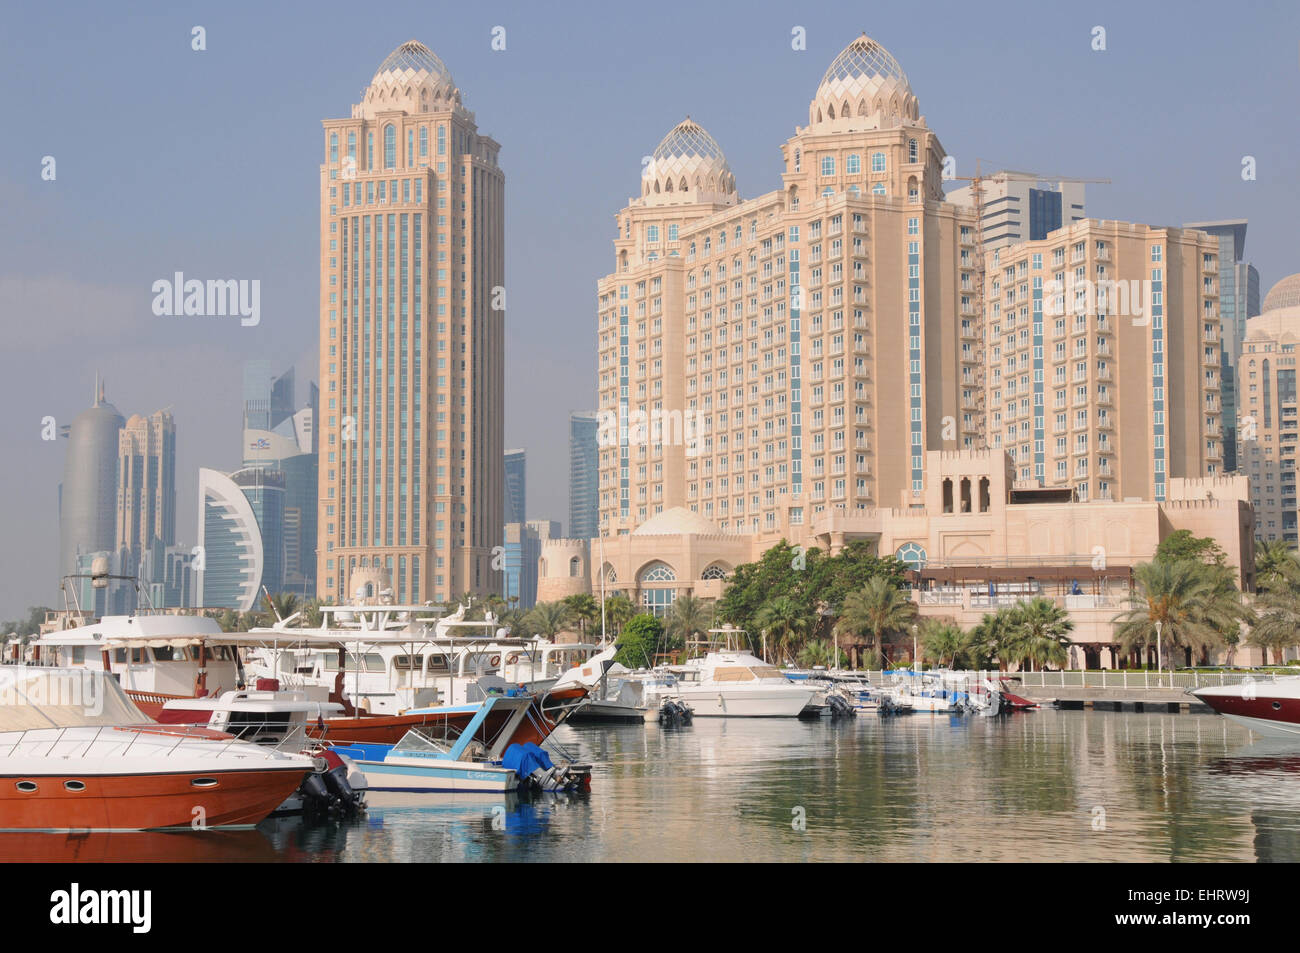 Four Seasons Hotel and Marina, West Bay, Doha, Qatar. Moyen Orient. Le Qatar Hôtels. Banque D'Images